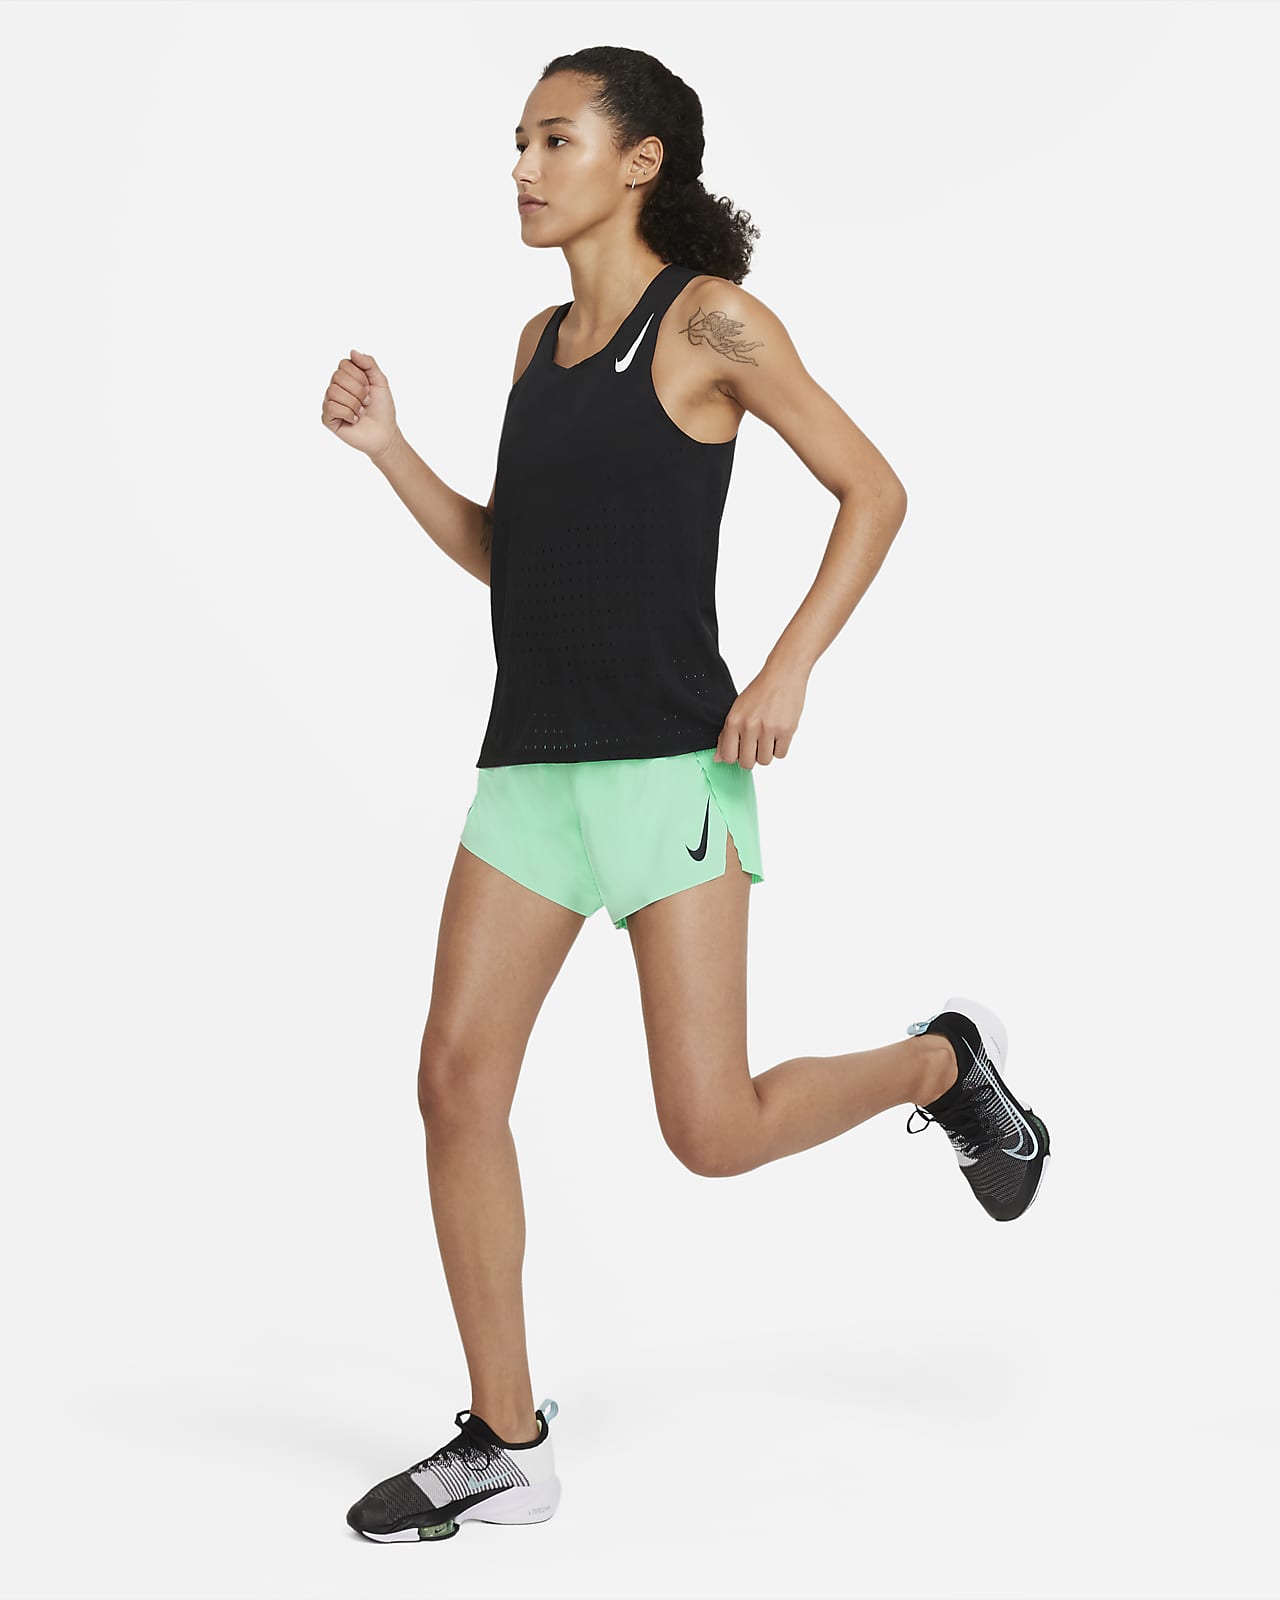 Nike AeroSwift Women's Running Leg Sleeves. UK